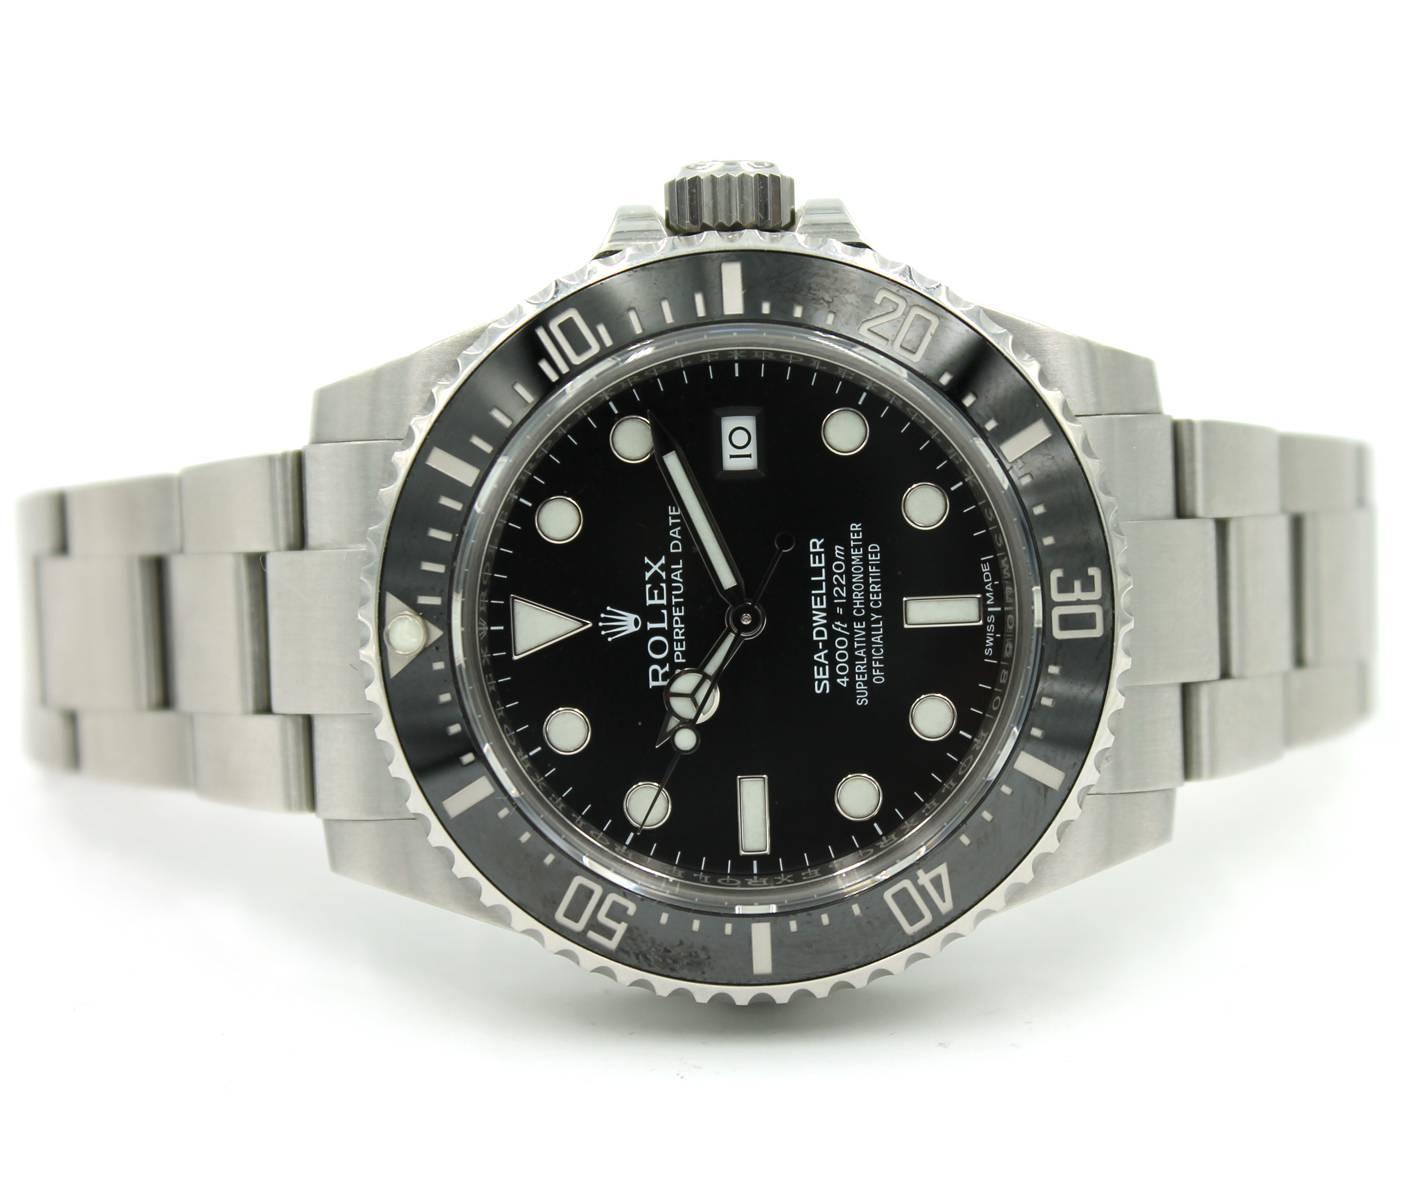 Rolex Sea Dweller 44mm watch with ceramic black bezel, black dial, oyster bracelet, and sapphire crystal. Current model number 116600, Serial Number 33W....
MSRP $10,400.